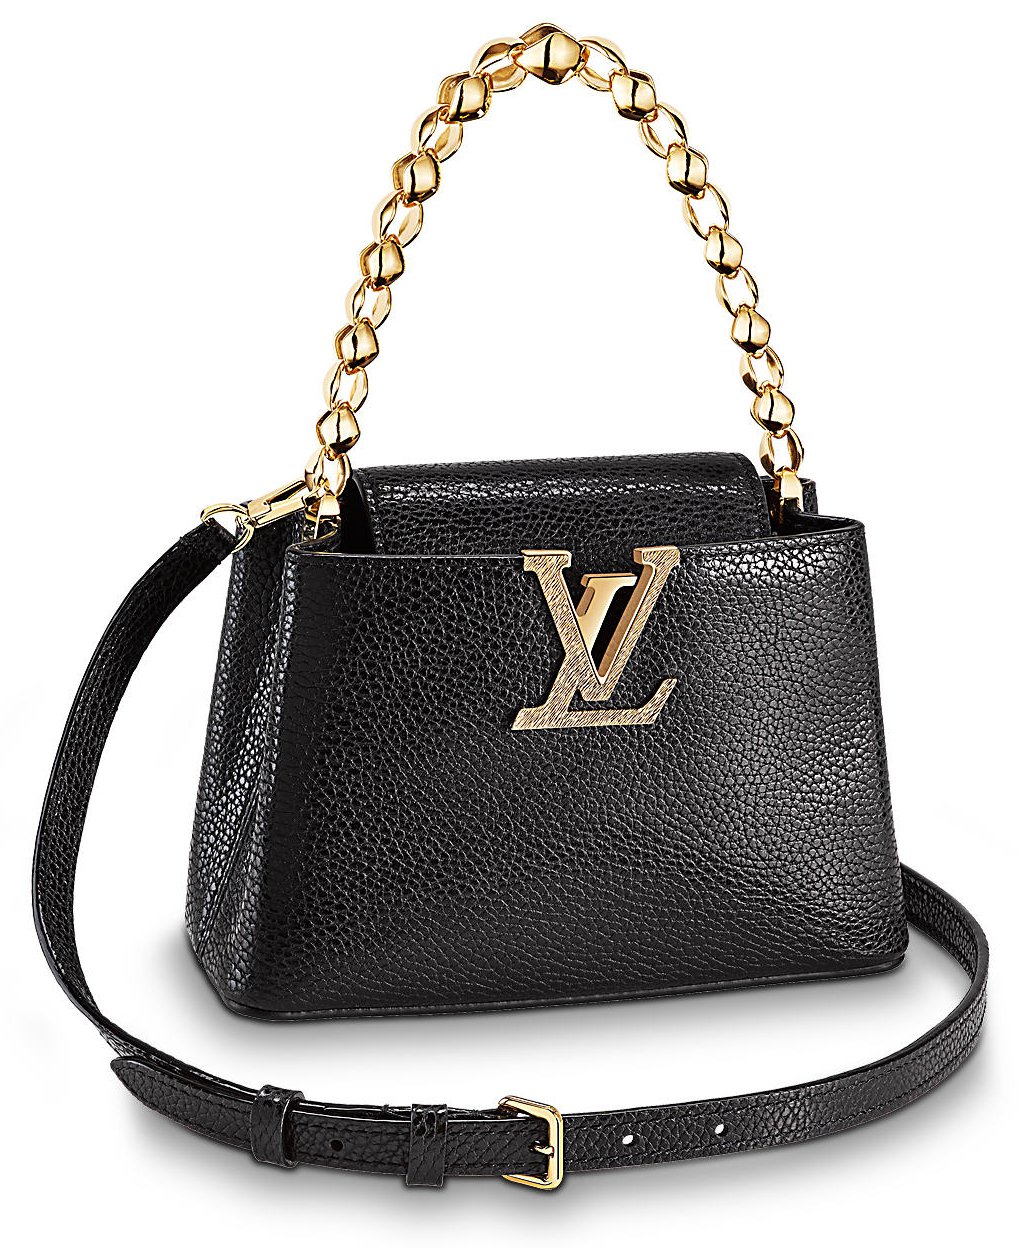 LOUIS VUITTON LV Black and White Gold Chain Shoulder Strap Bag